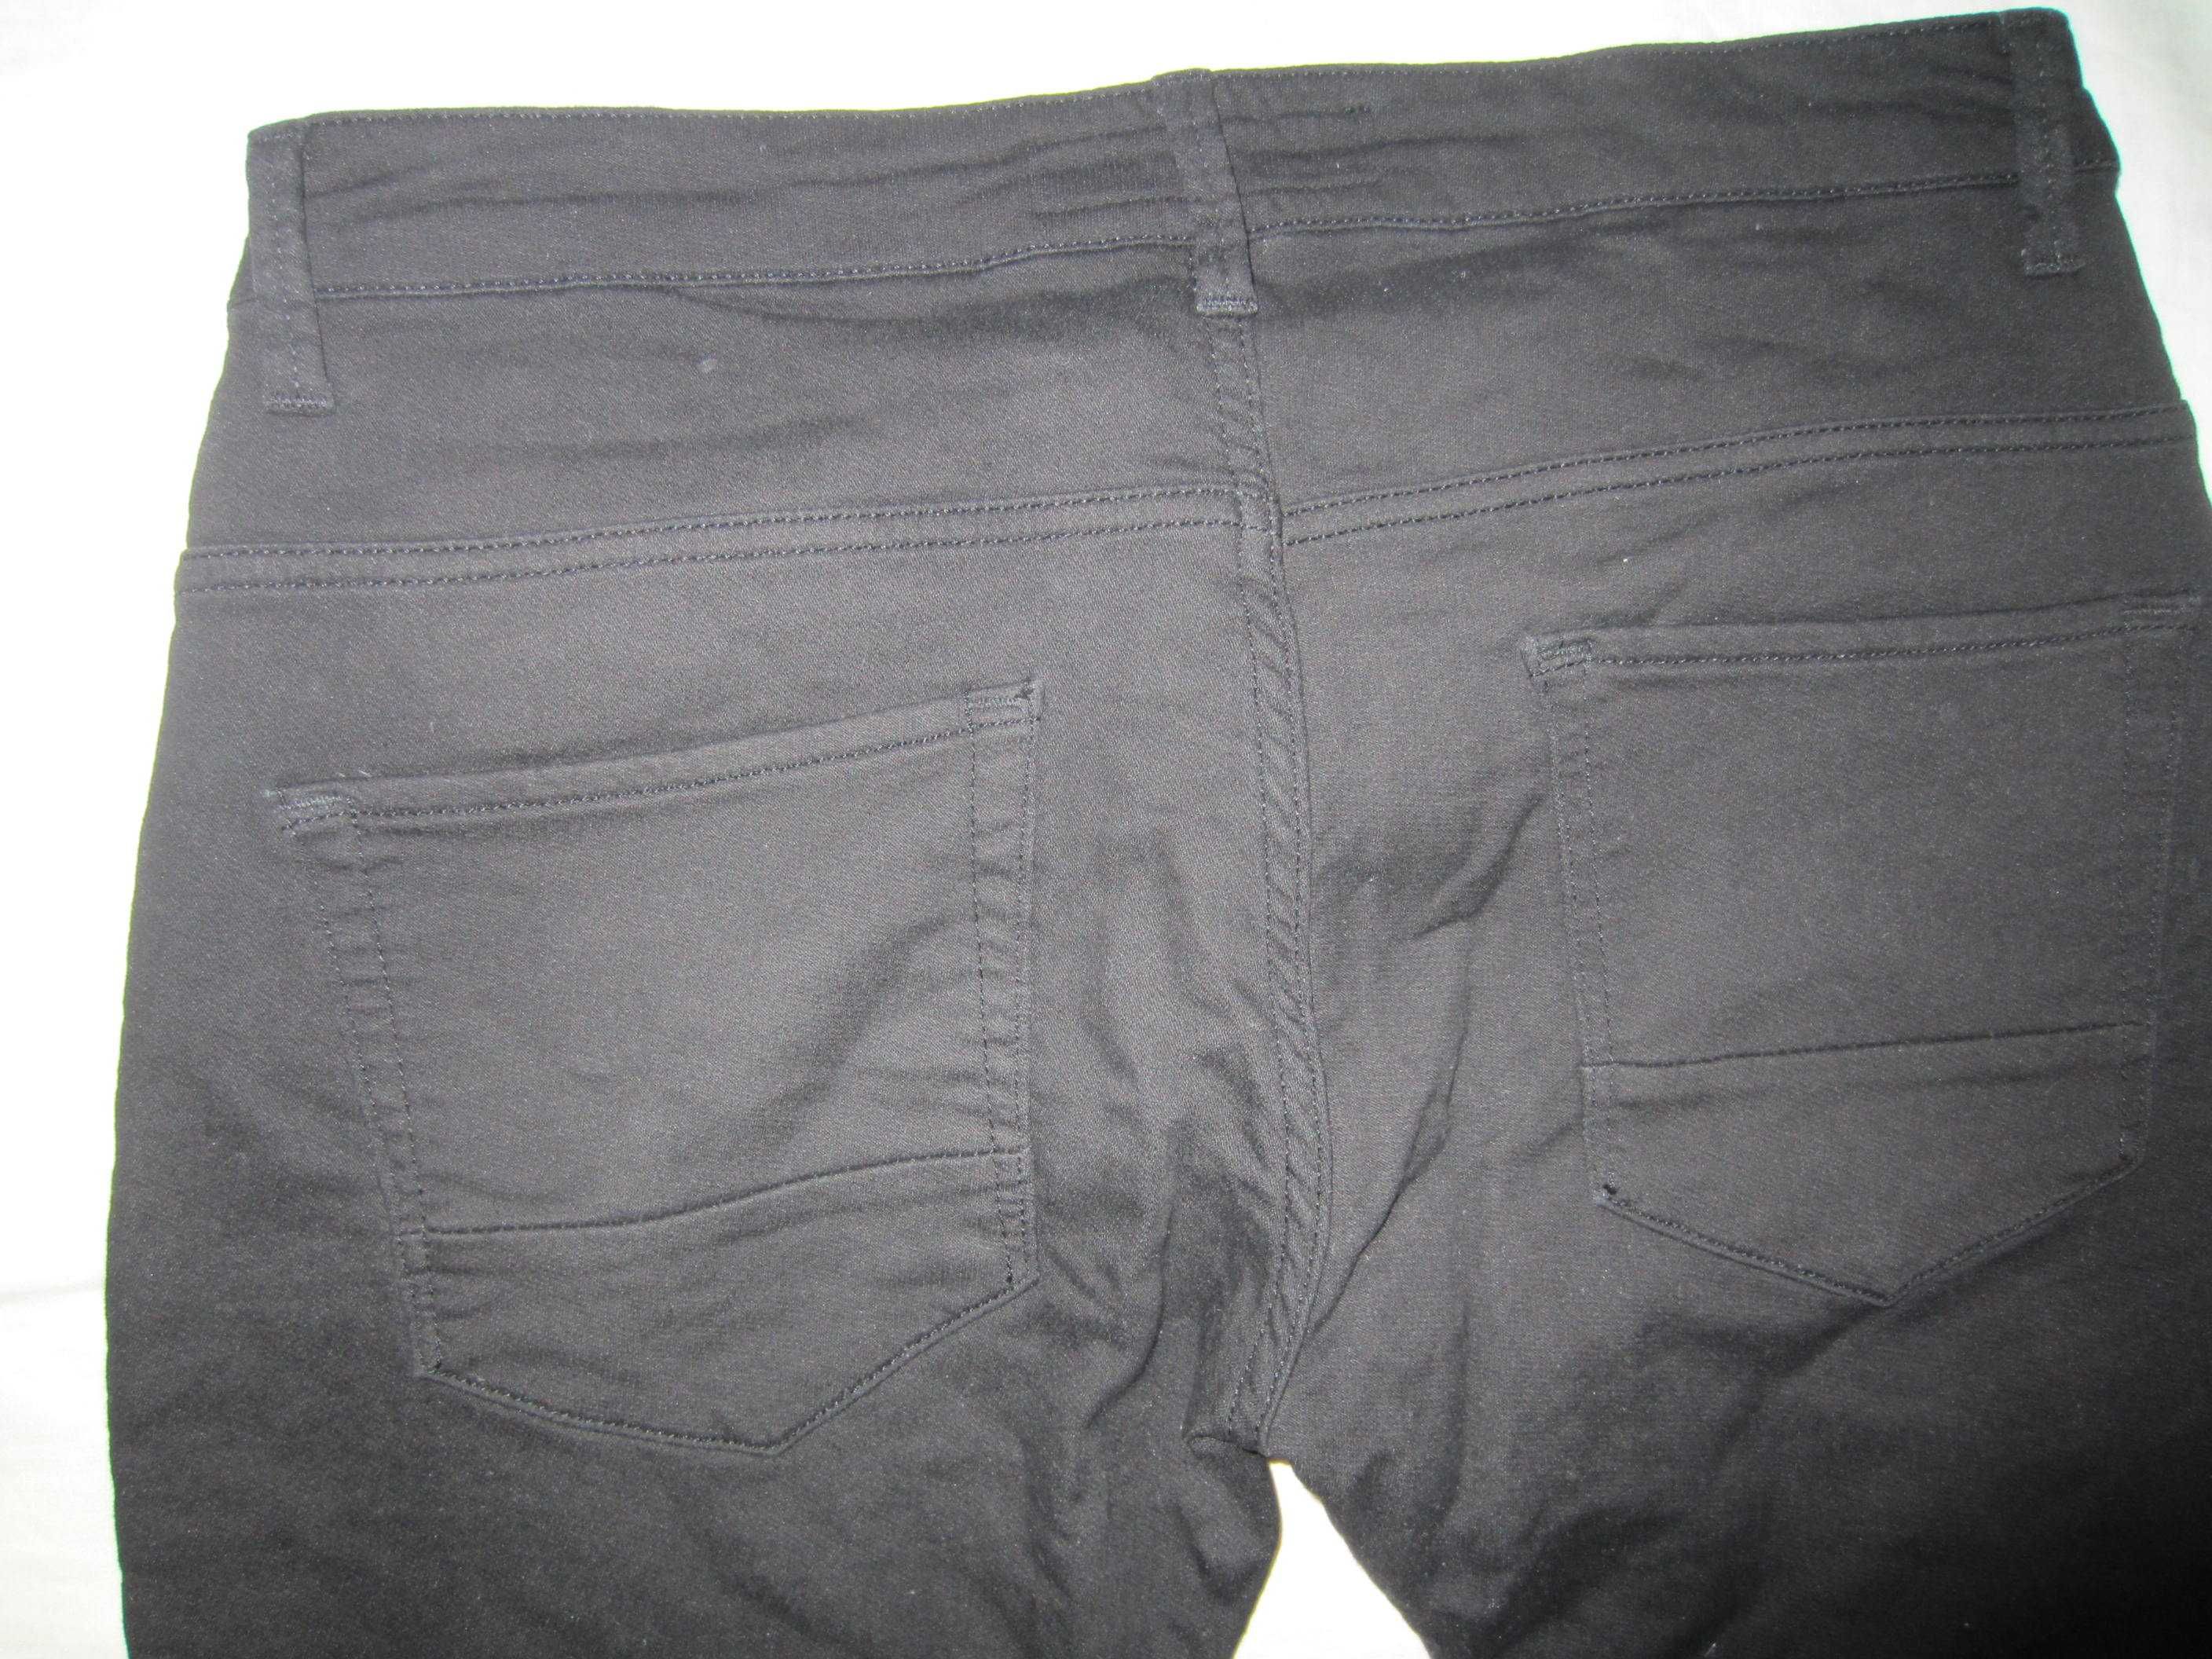 Pantalon Balmain Paris,W32 L32,Talie=88cm,Lung=102cm,skinny,noi